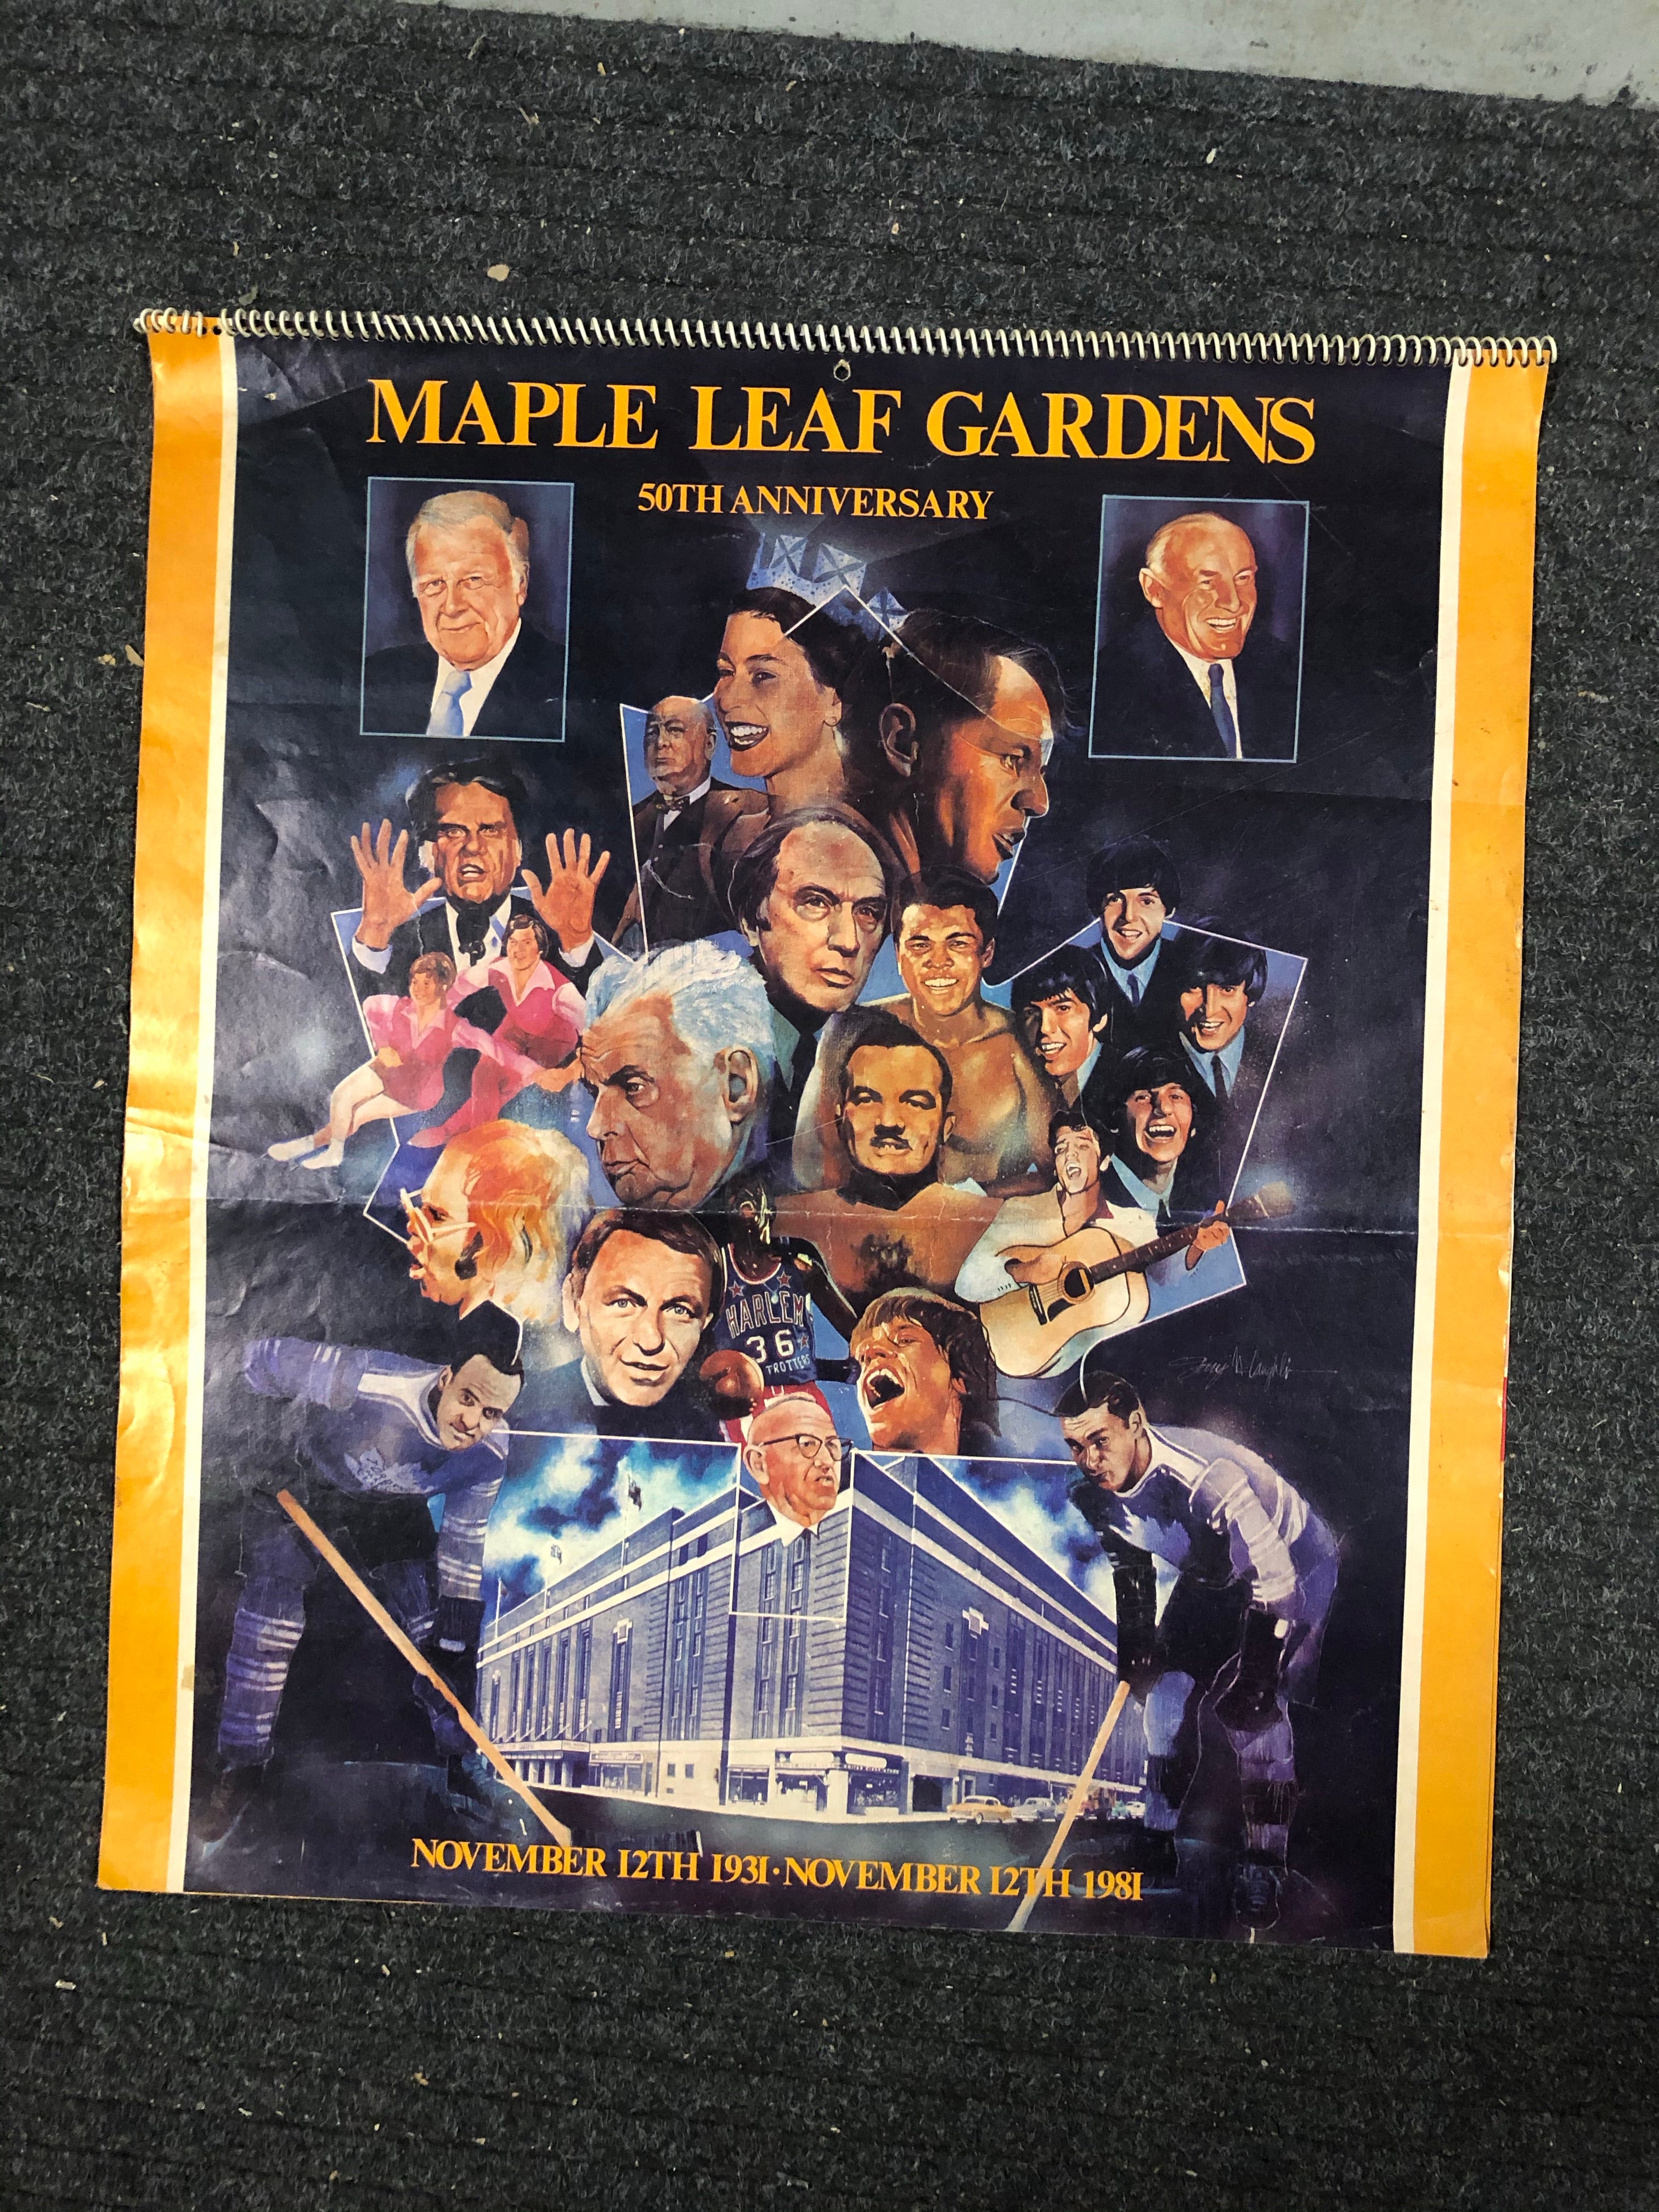 Toronto Maple Leafs Toronto Dominion hockey Calendar 1981-82